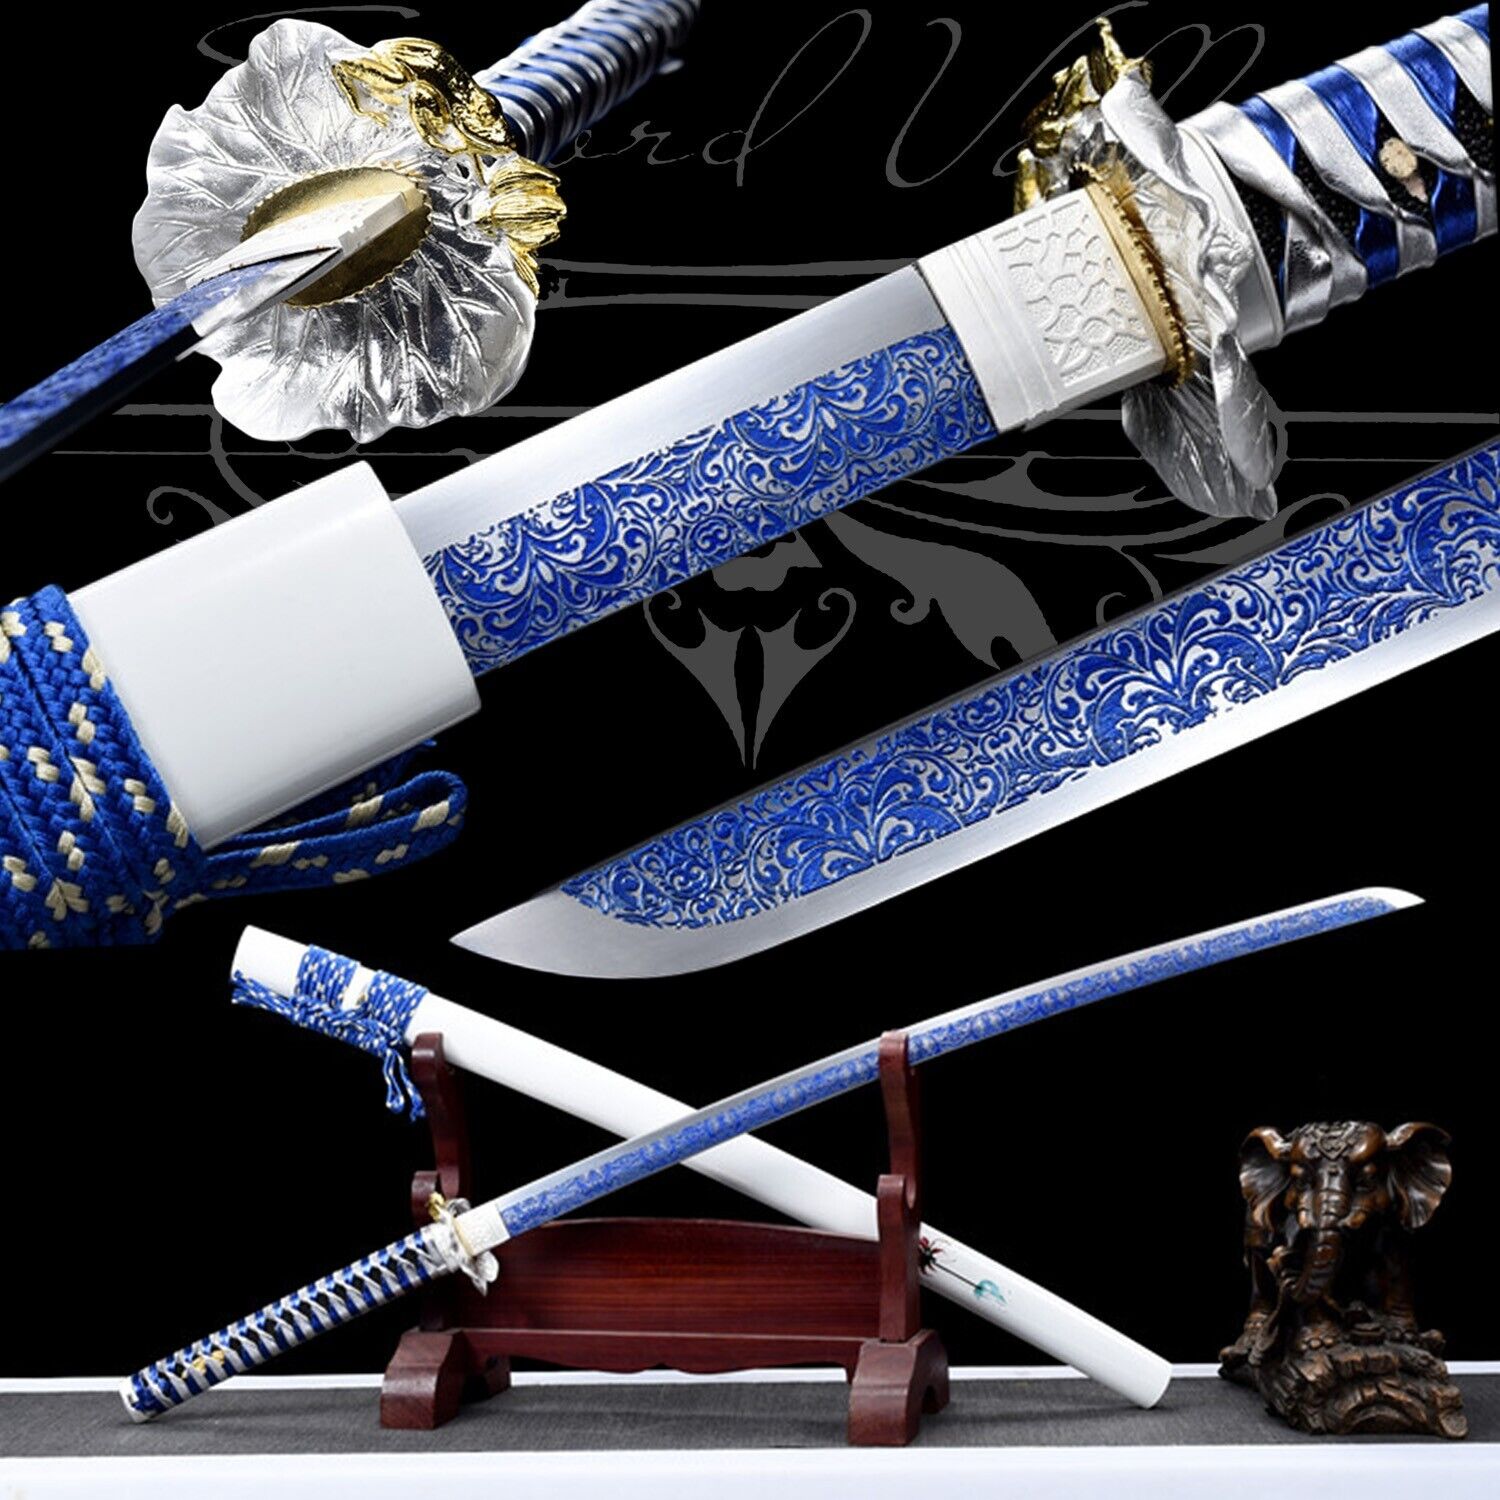 Handmade Katana/Samurai Sword/Carbon Steel/High-Quality Blade/Silver/Japanese